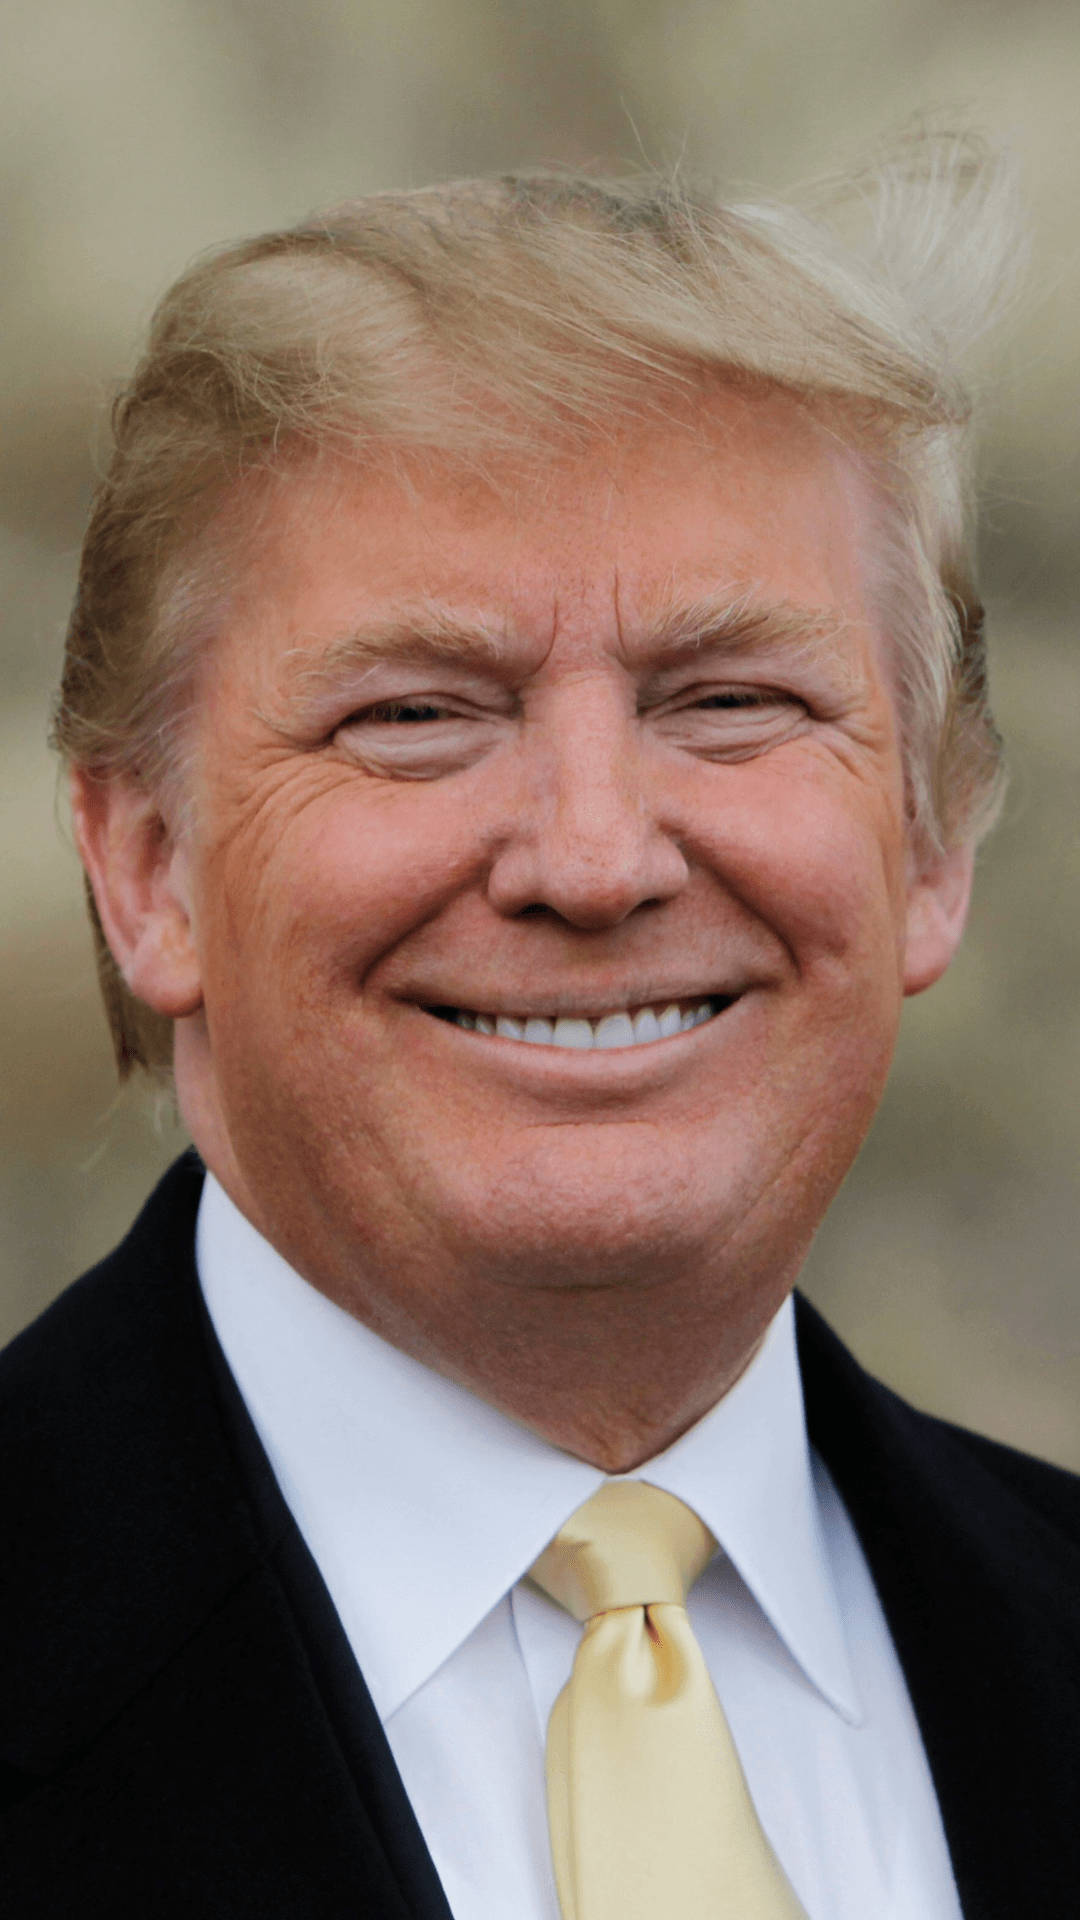 Donald Trump Med Toothy Grin Wallpaper